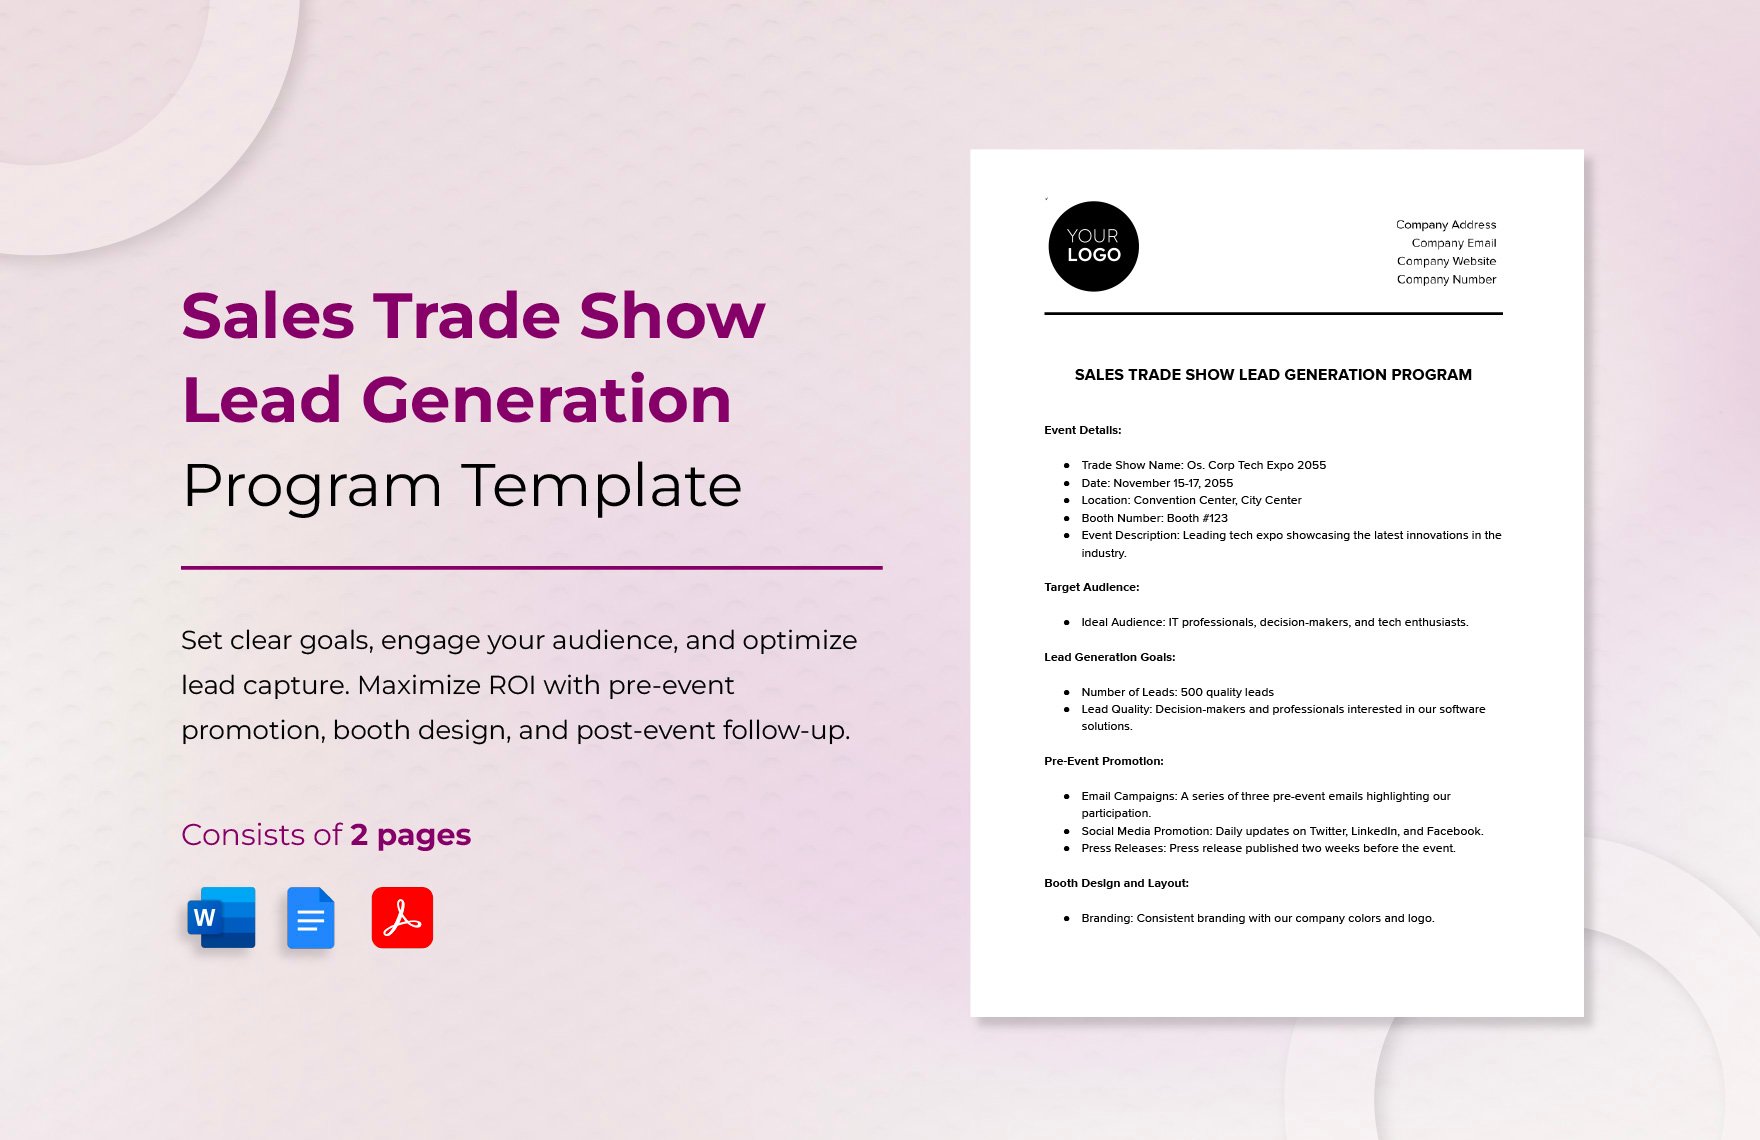 Sales Trade Show Lead Generation Program Template